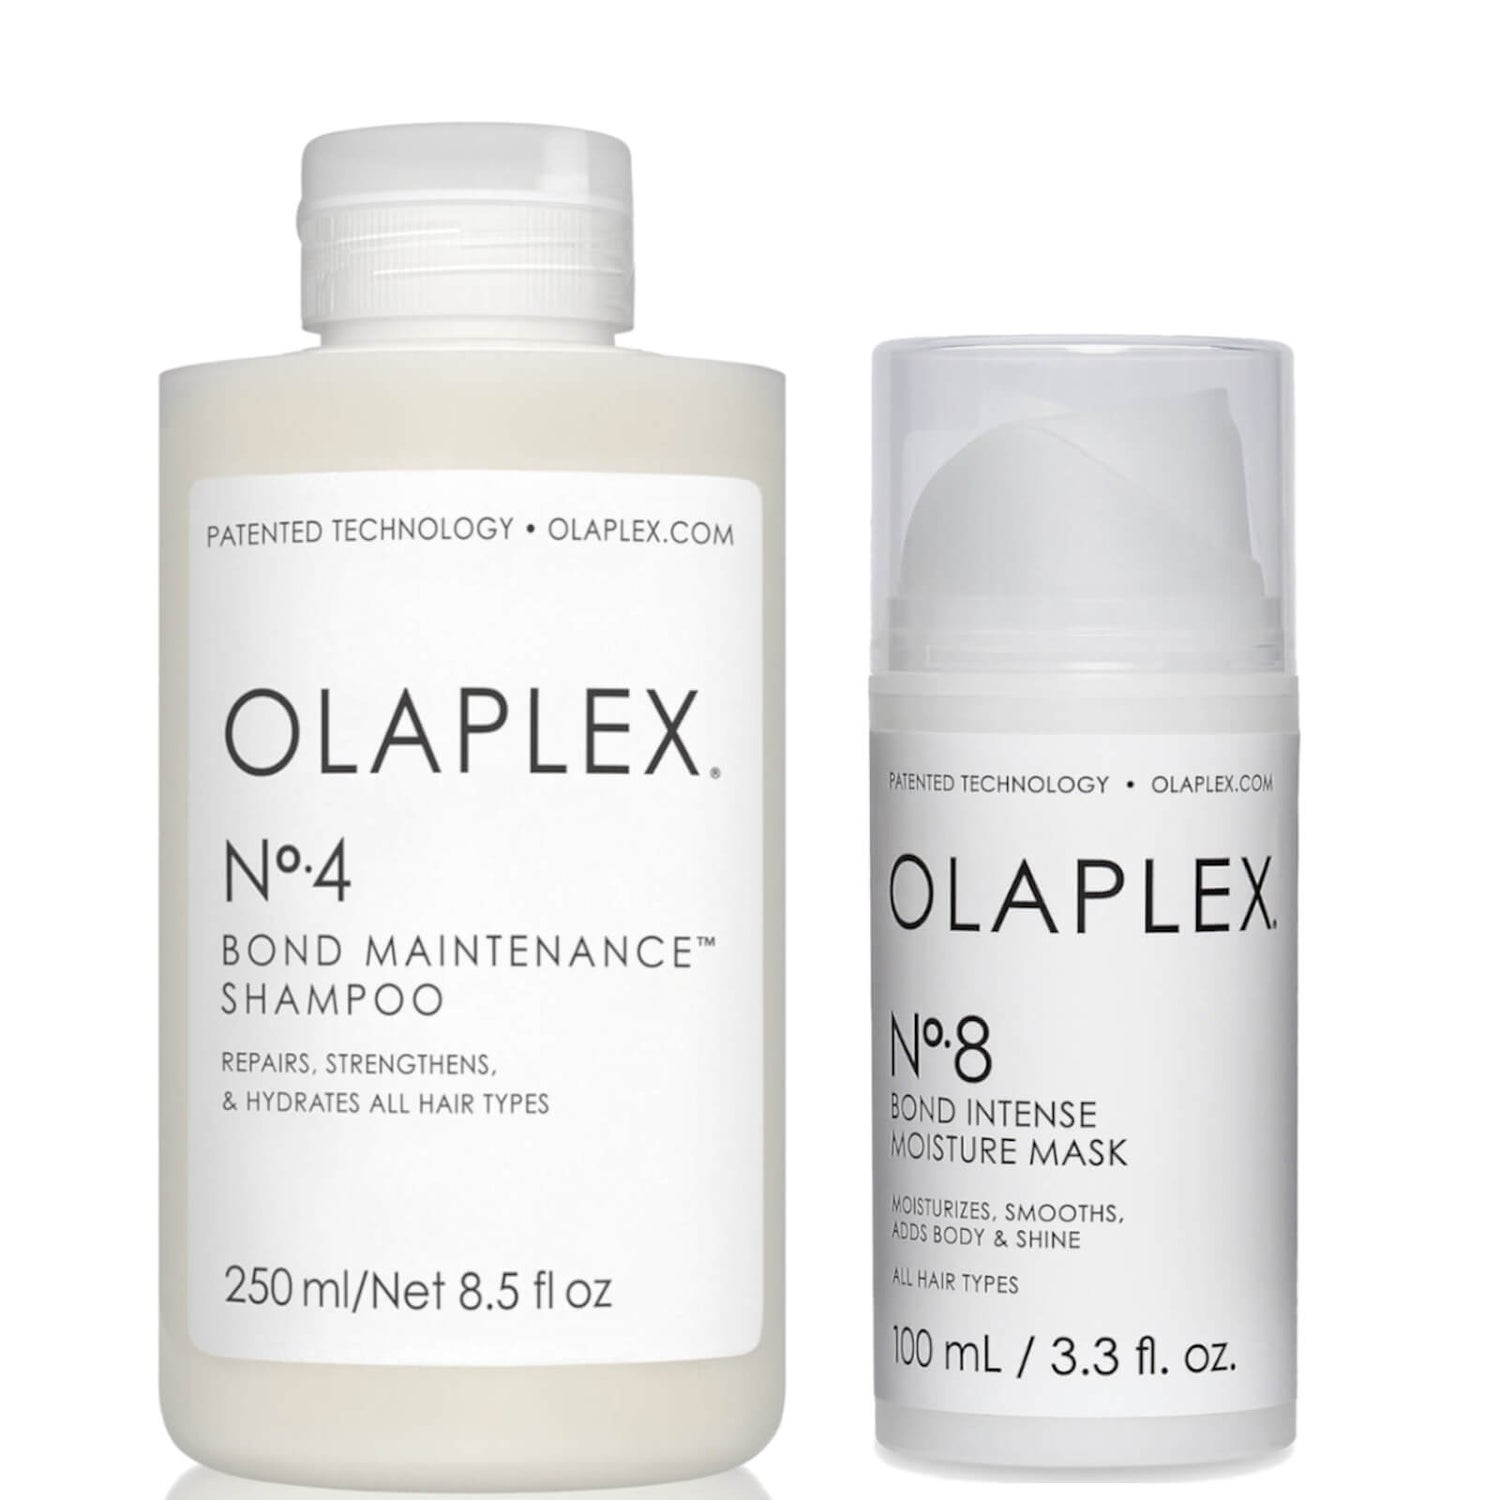 Olaplex Bond Strengthening Cleanse and Mask Bundle (Worth $108.00)